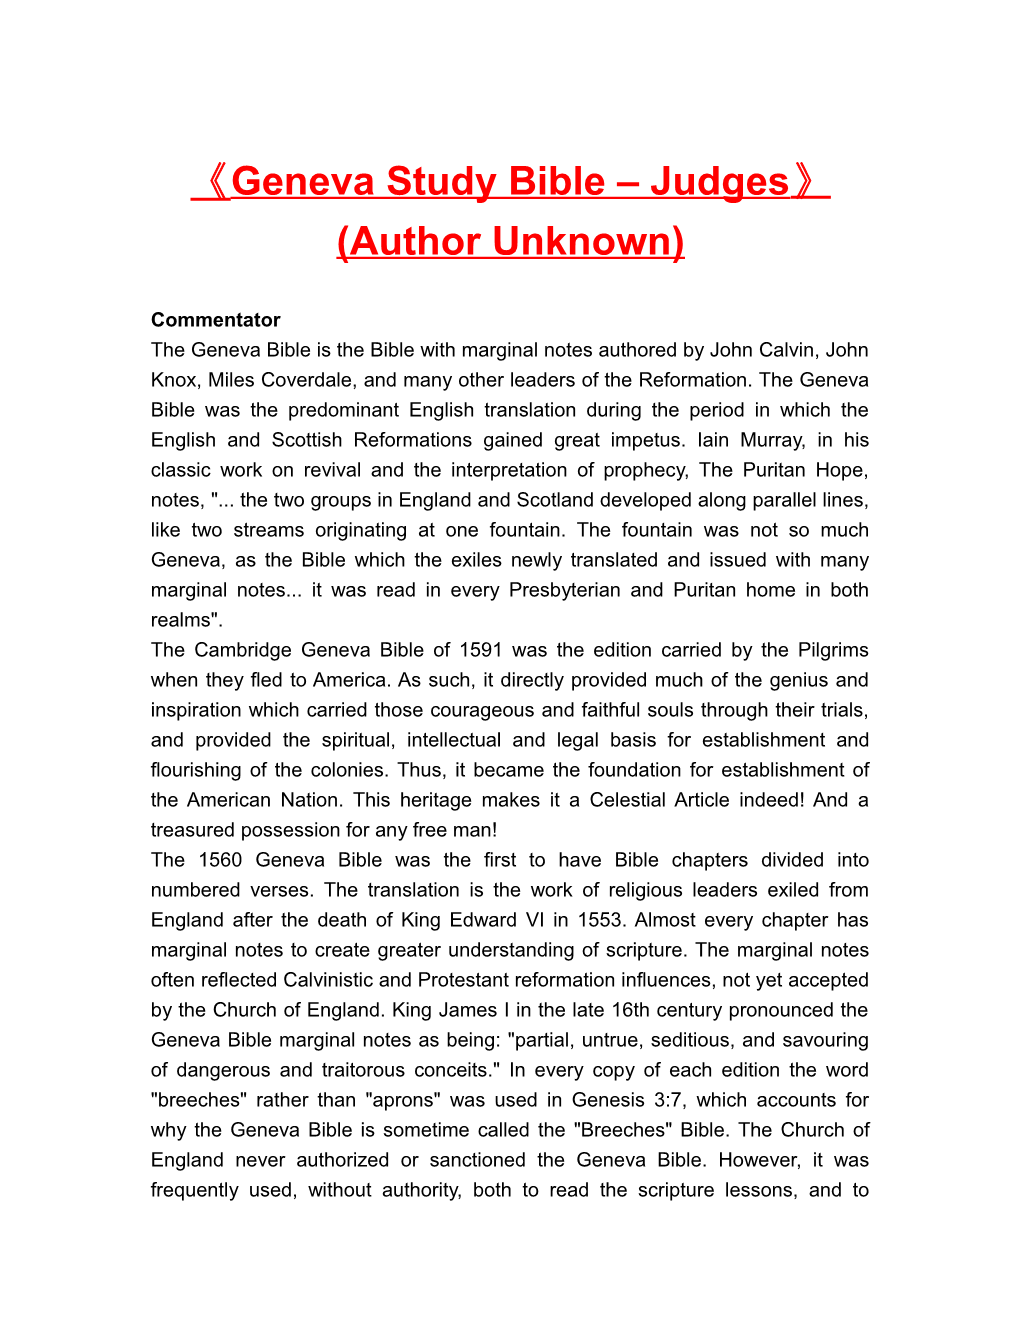 Geneva Study Bible Judges (Author Unknown)